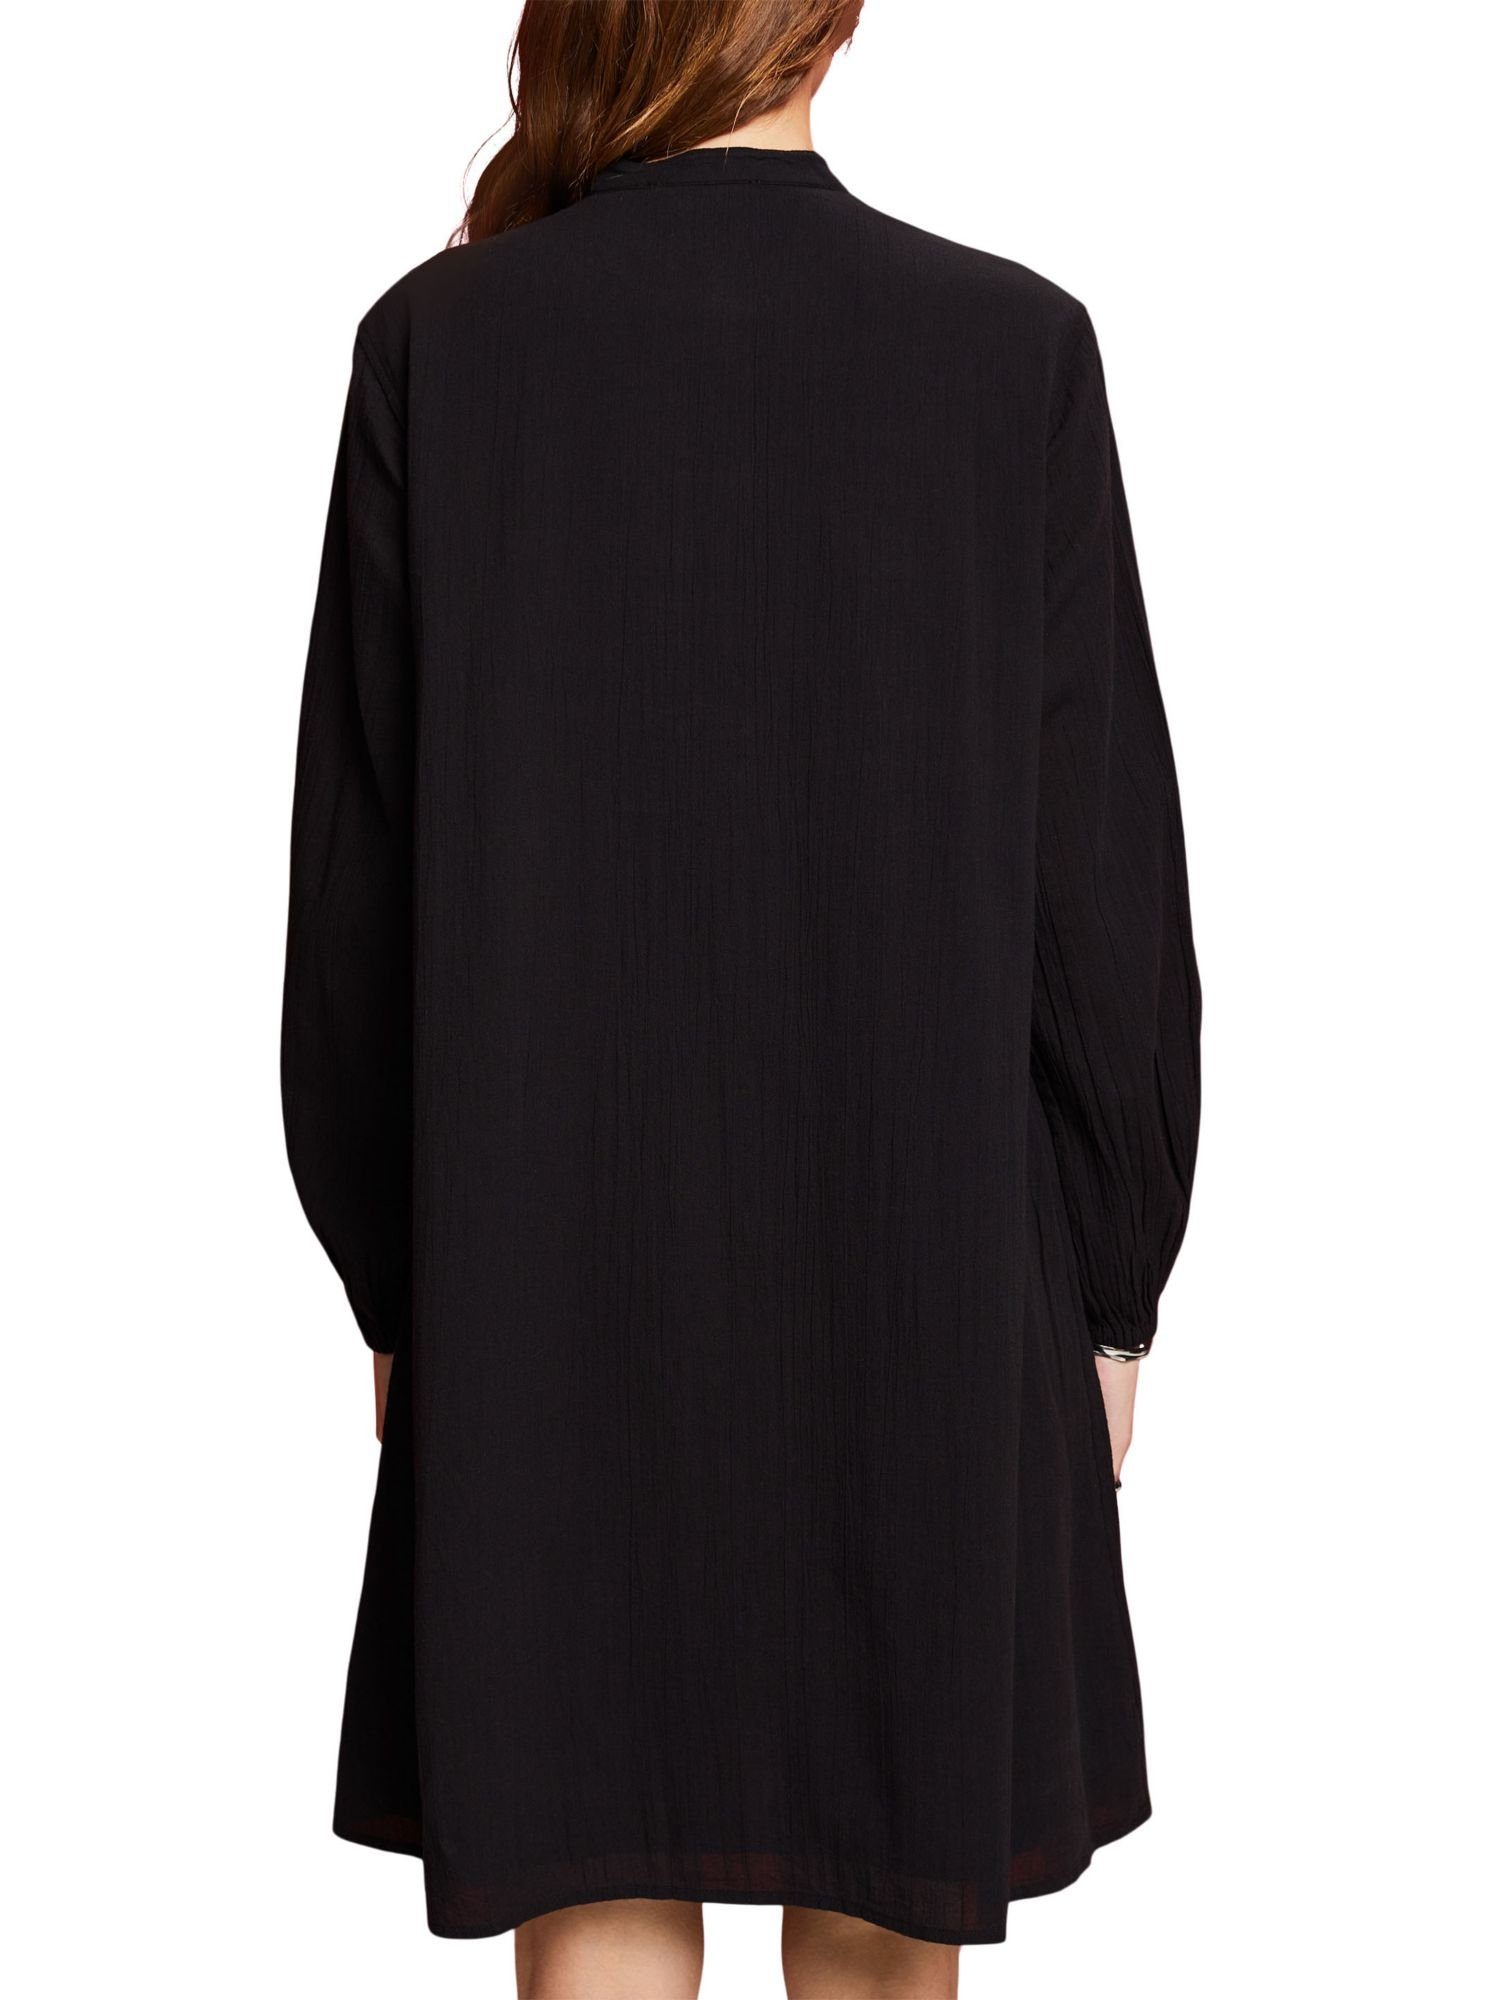 Hemdblusenkleid Besticktes Esprit BLACK Midikleid